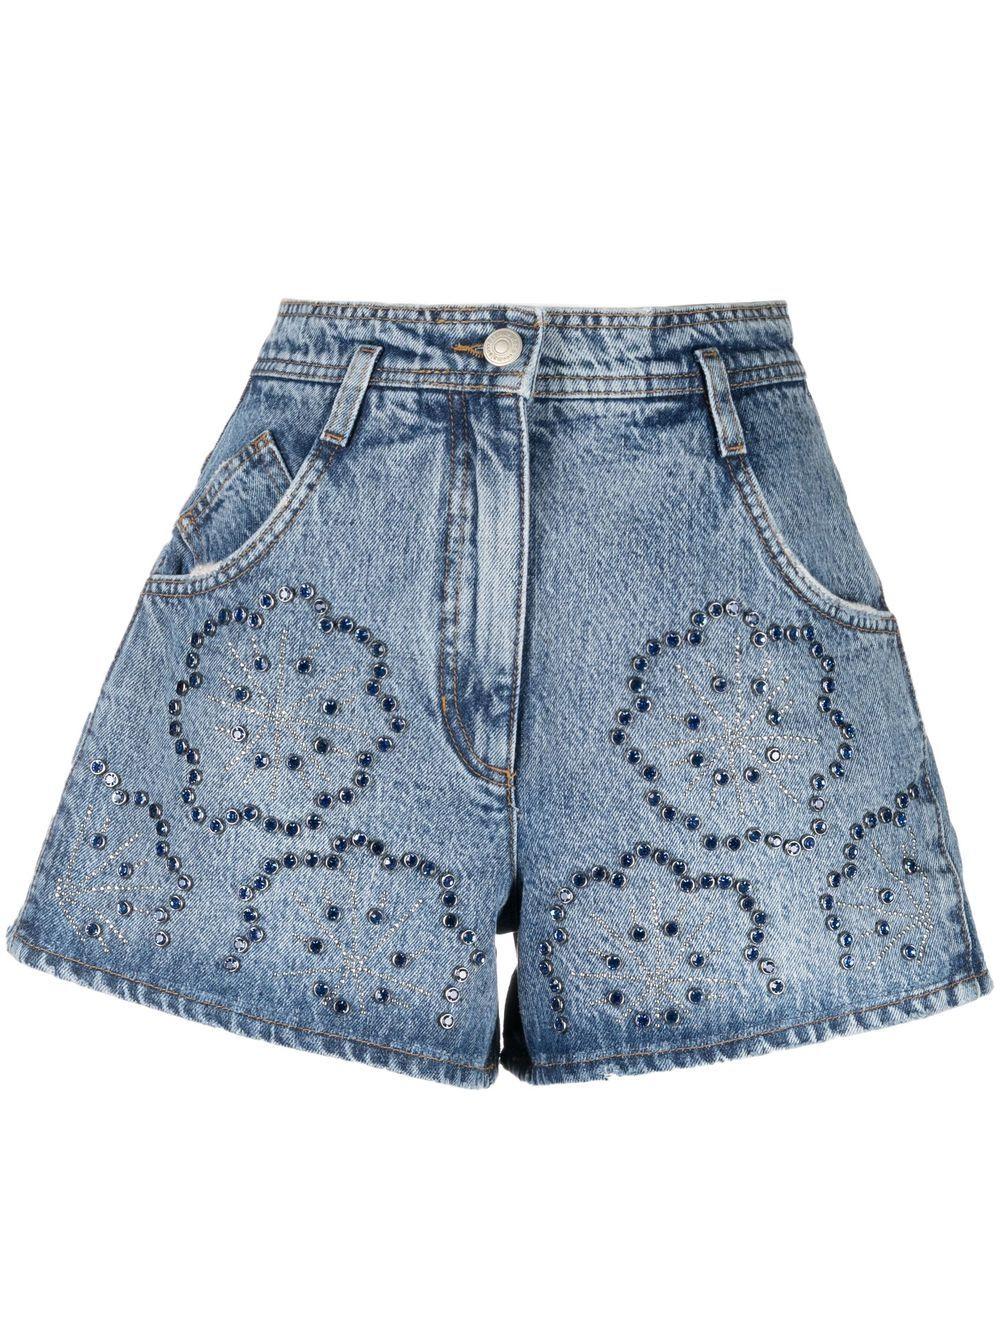 Mode Jeansshorts Kurze Hosen Jeans shorts mit Kristallen 